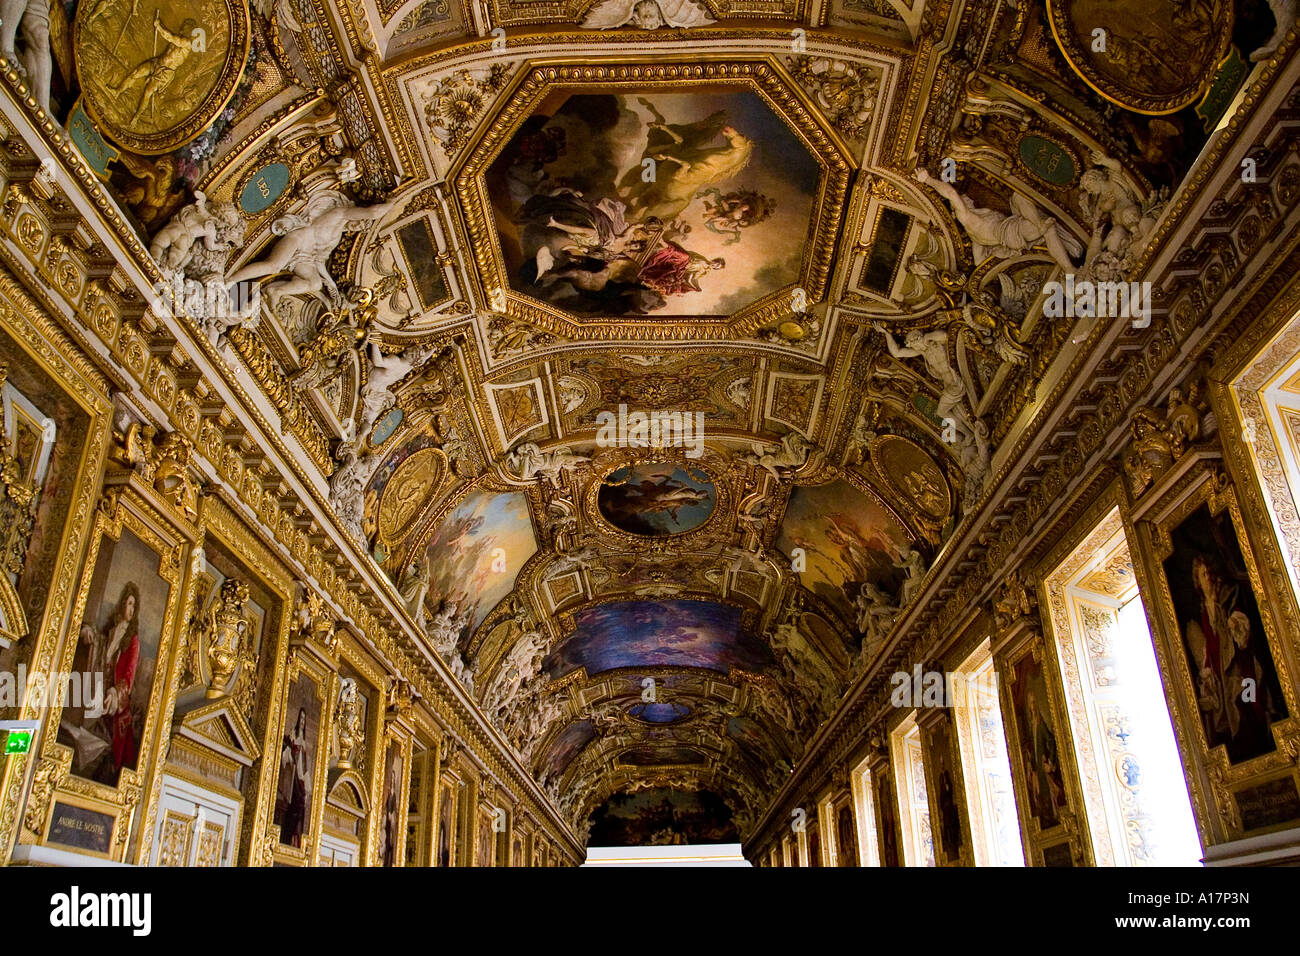 Ceiling inside The Musee du Louvre, Paris, France. Stock Photo